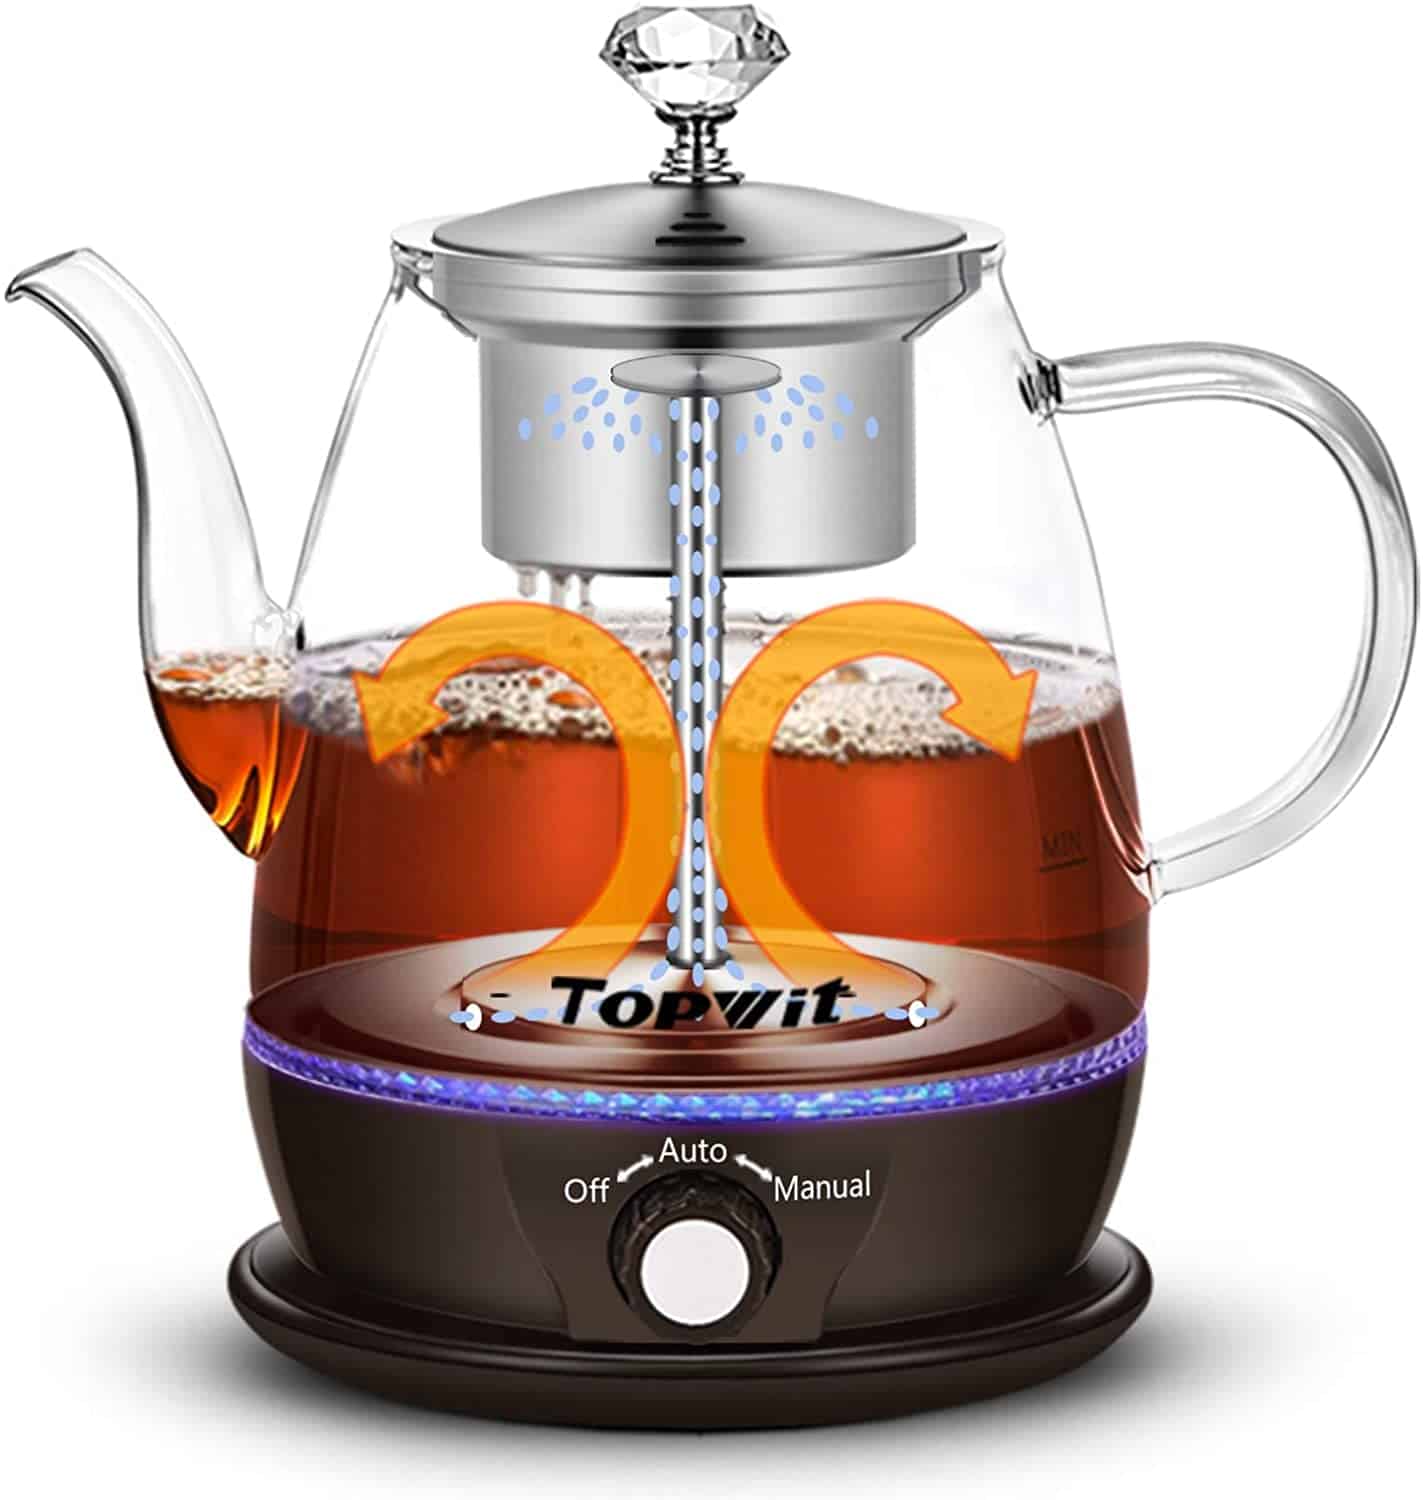 best electric teapot